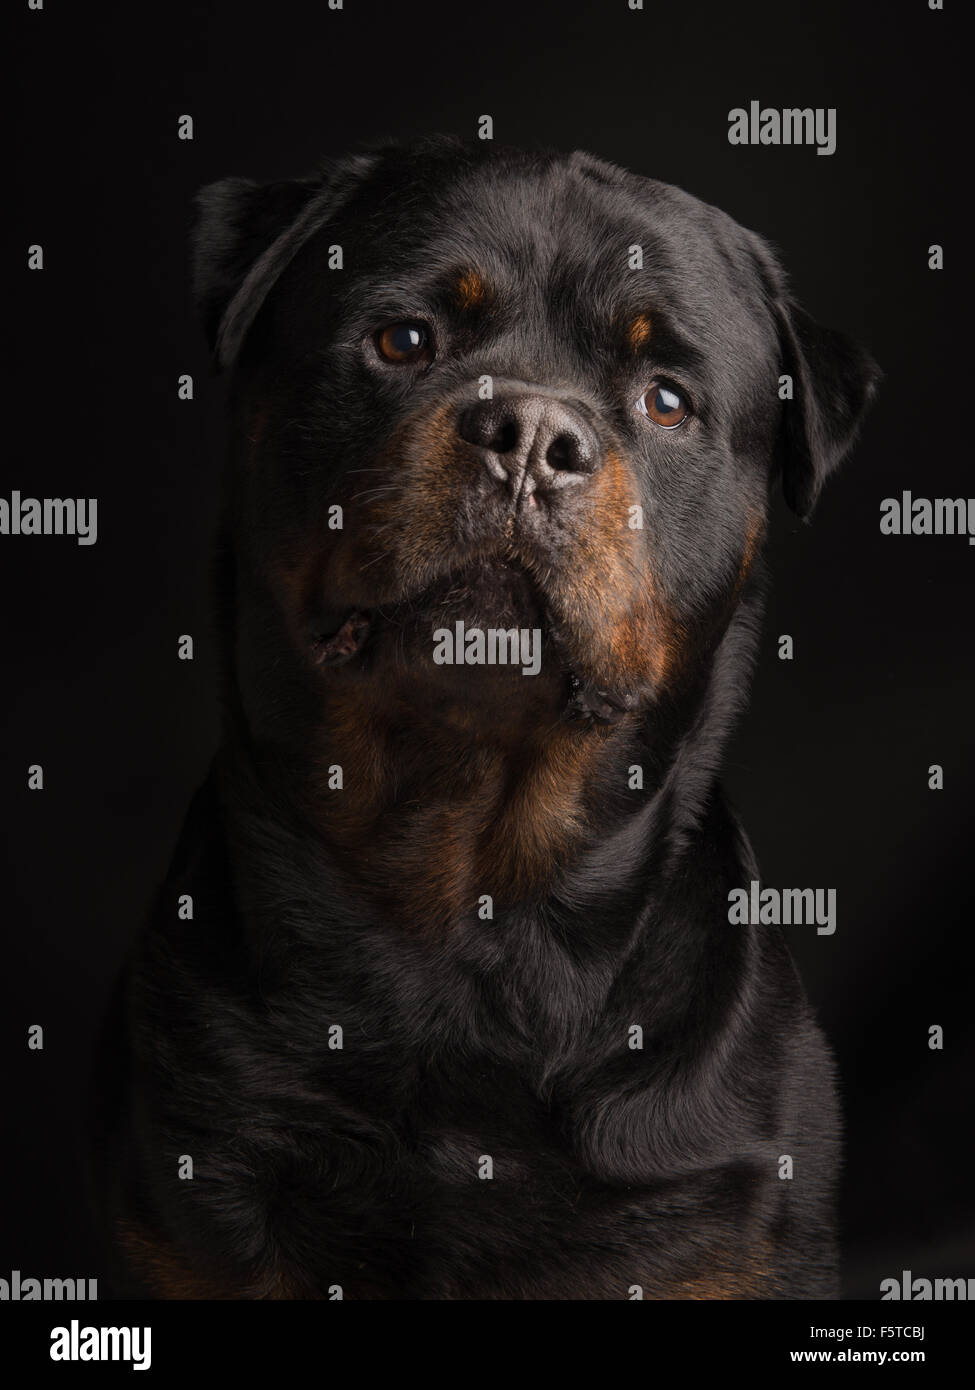 Rottweiler dog portrait on a black background Stock Photo